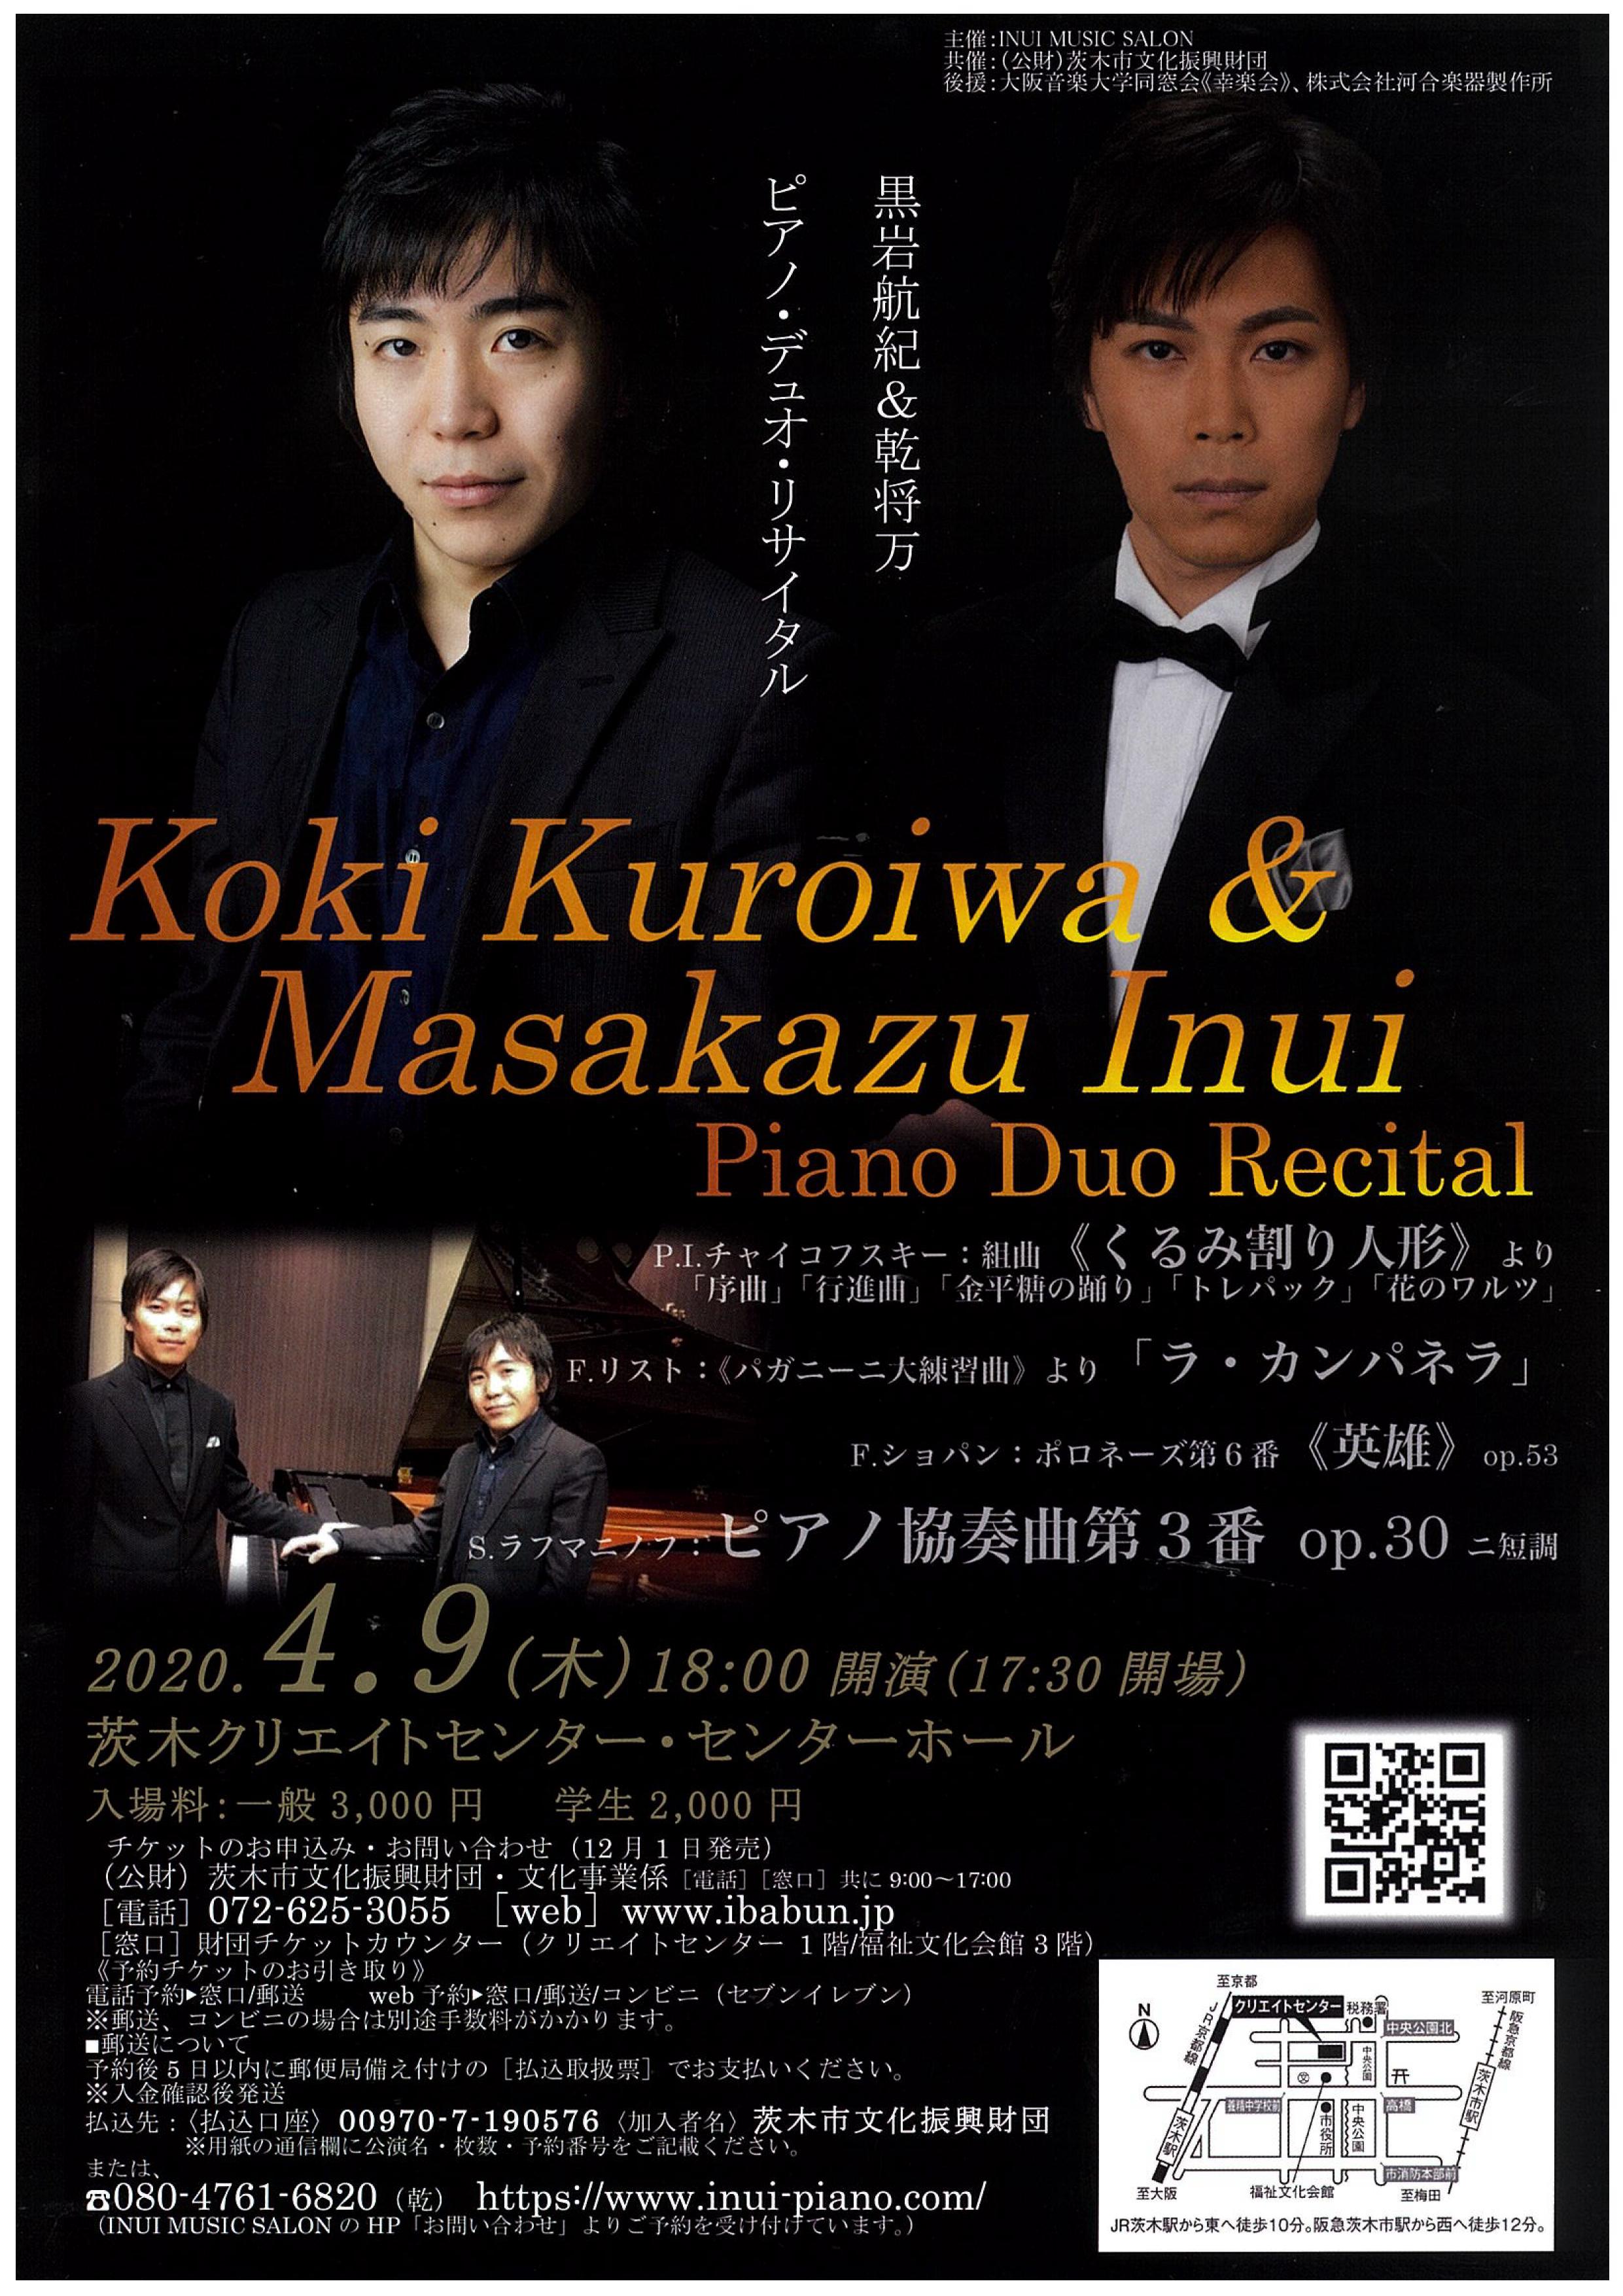 【延期】Koki Kuroiwa & Masakazu Inui  Piano Duo Recital